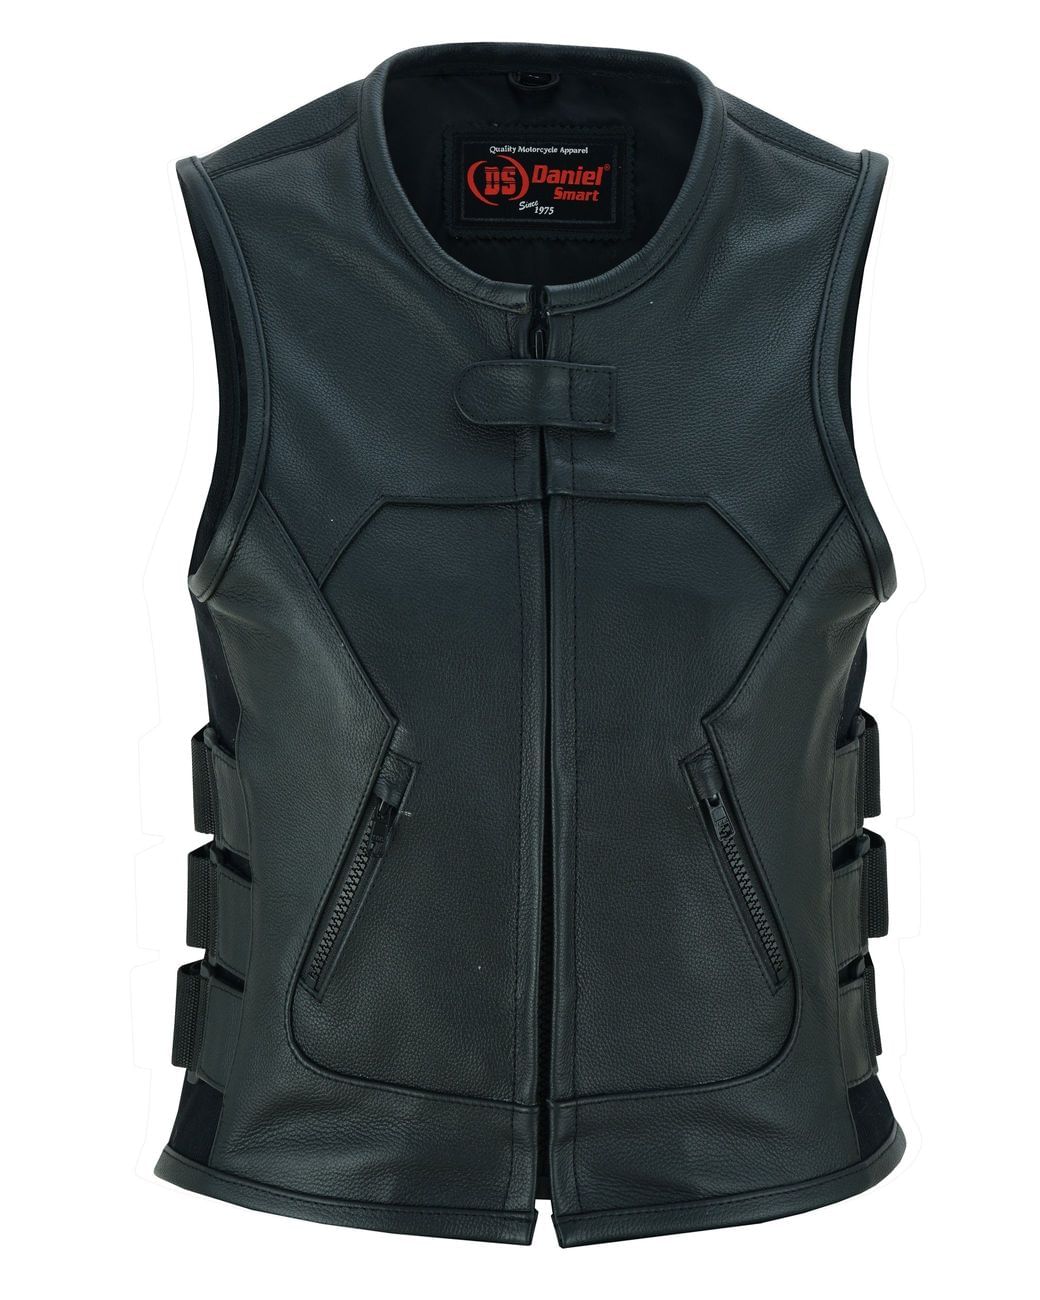 DS200 Women's Updated SWAT Team Style Vest